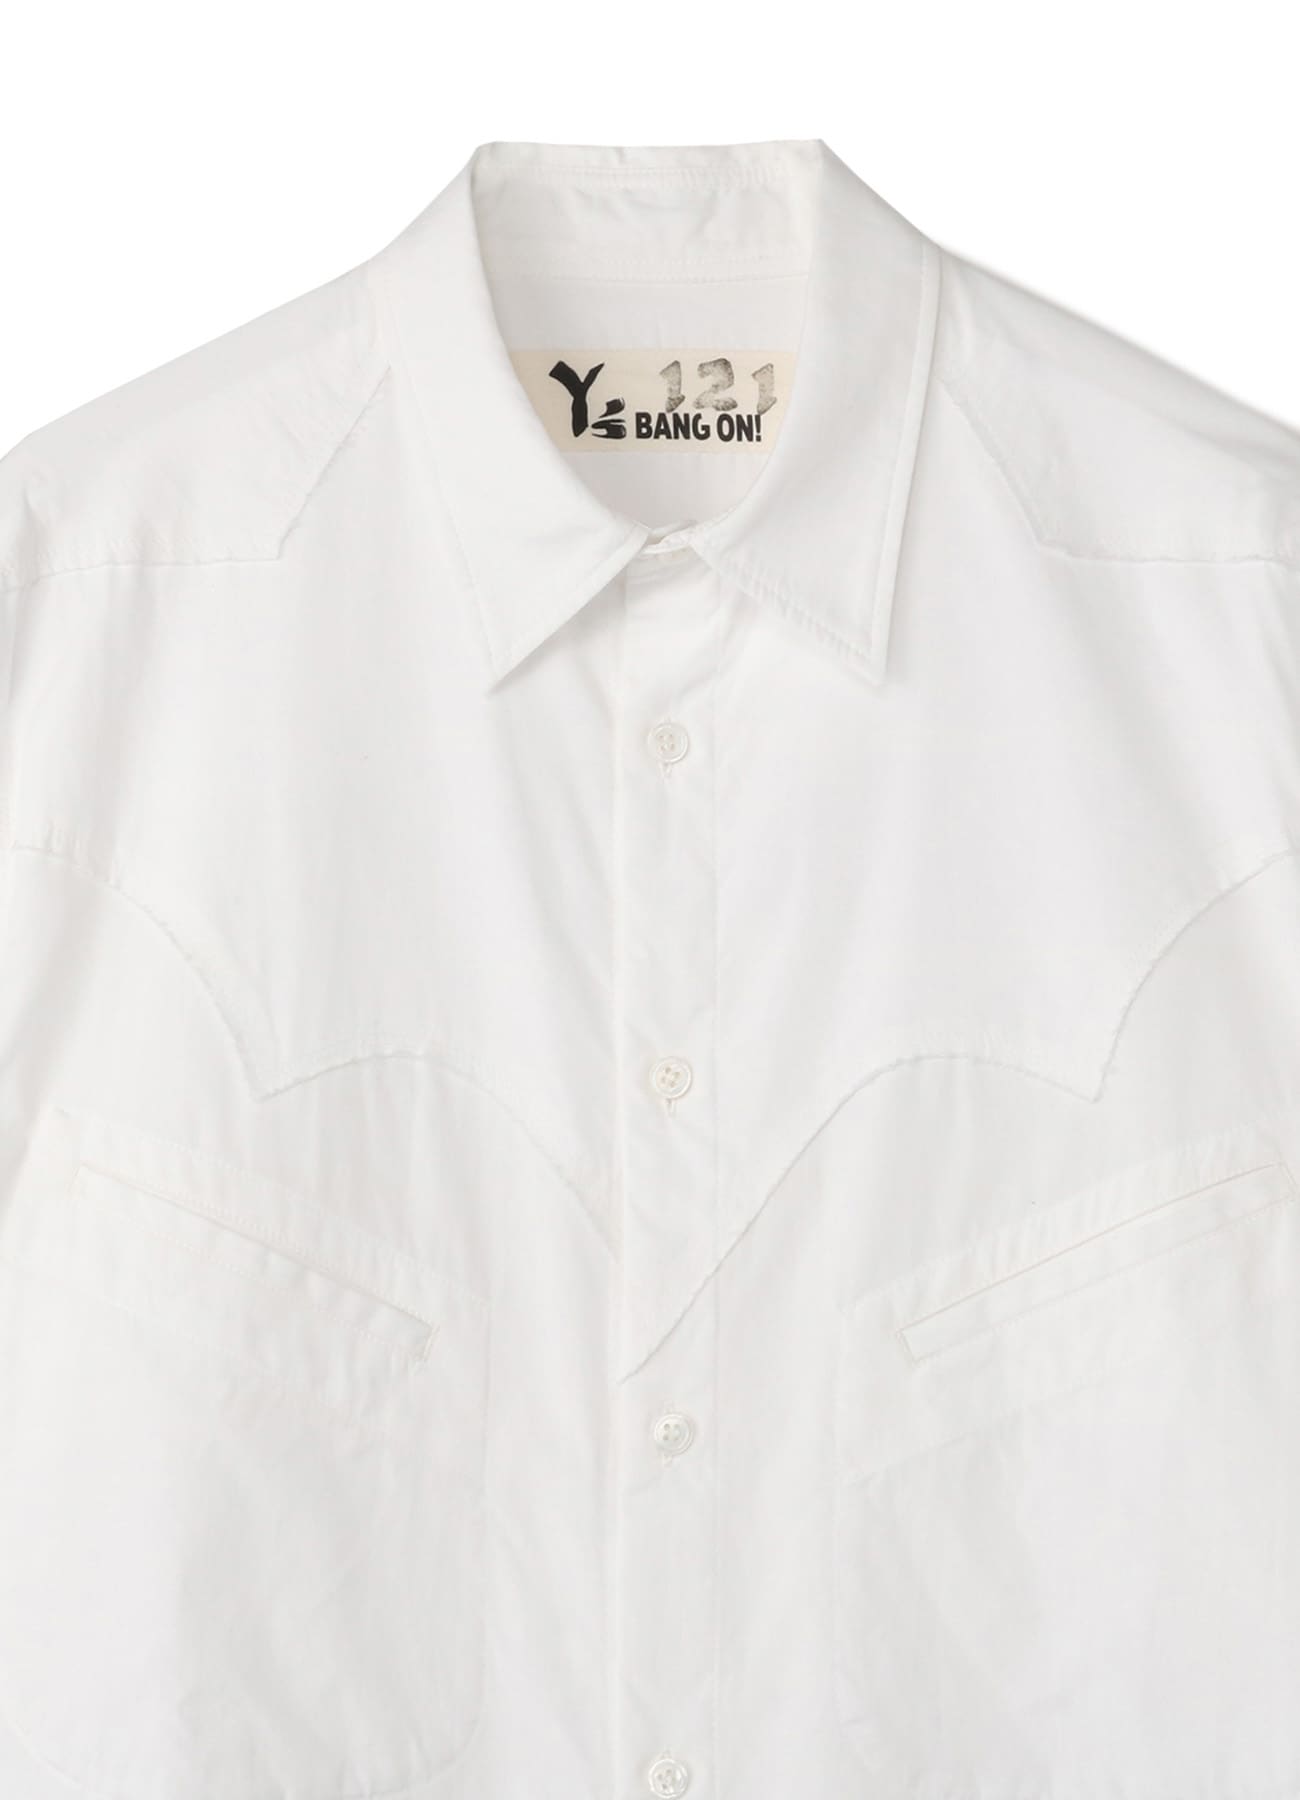 Y's BANG ONBigsilhouette Shirtファッション